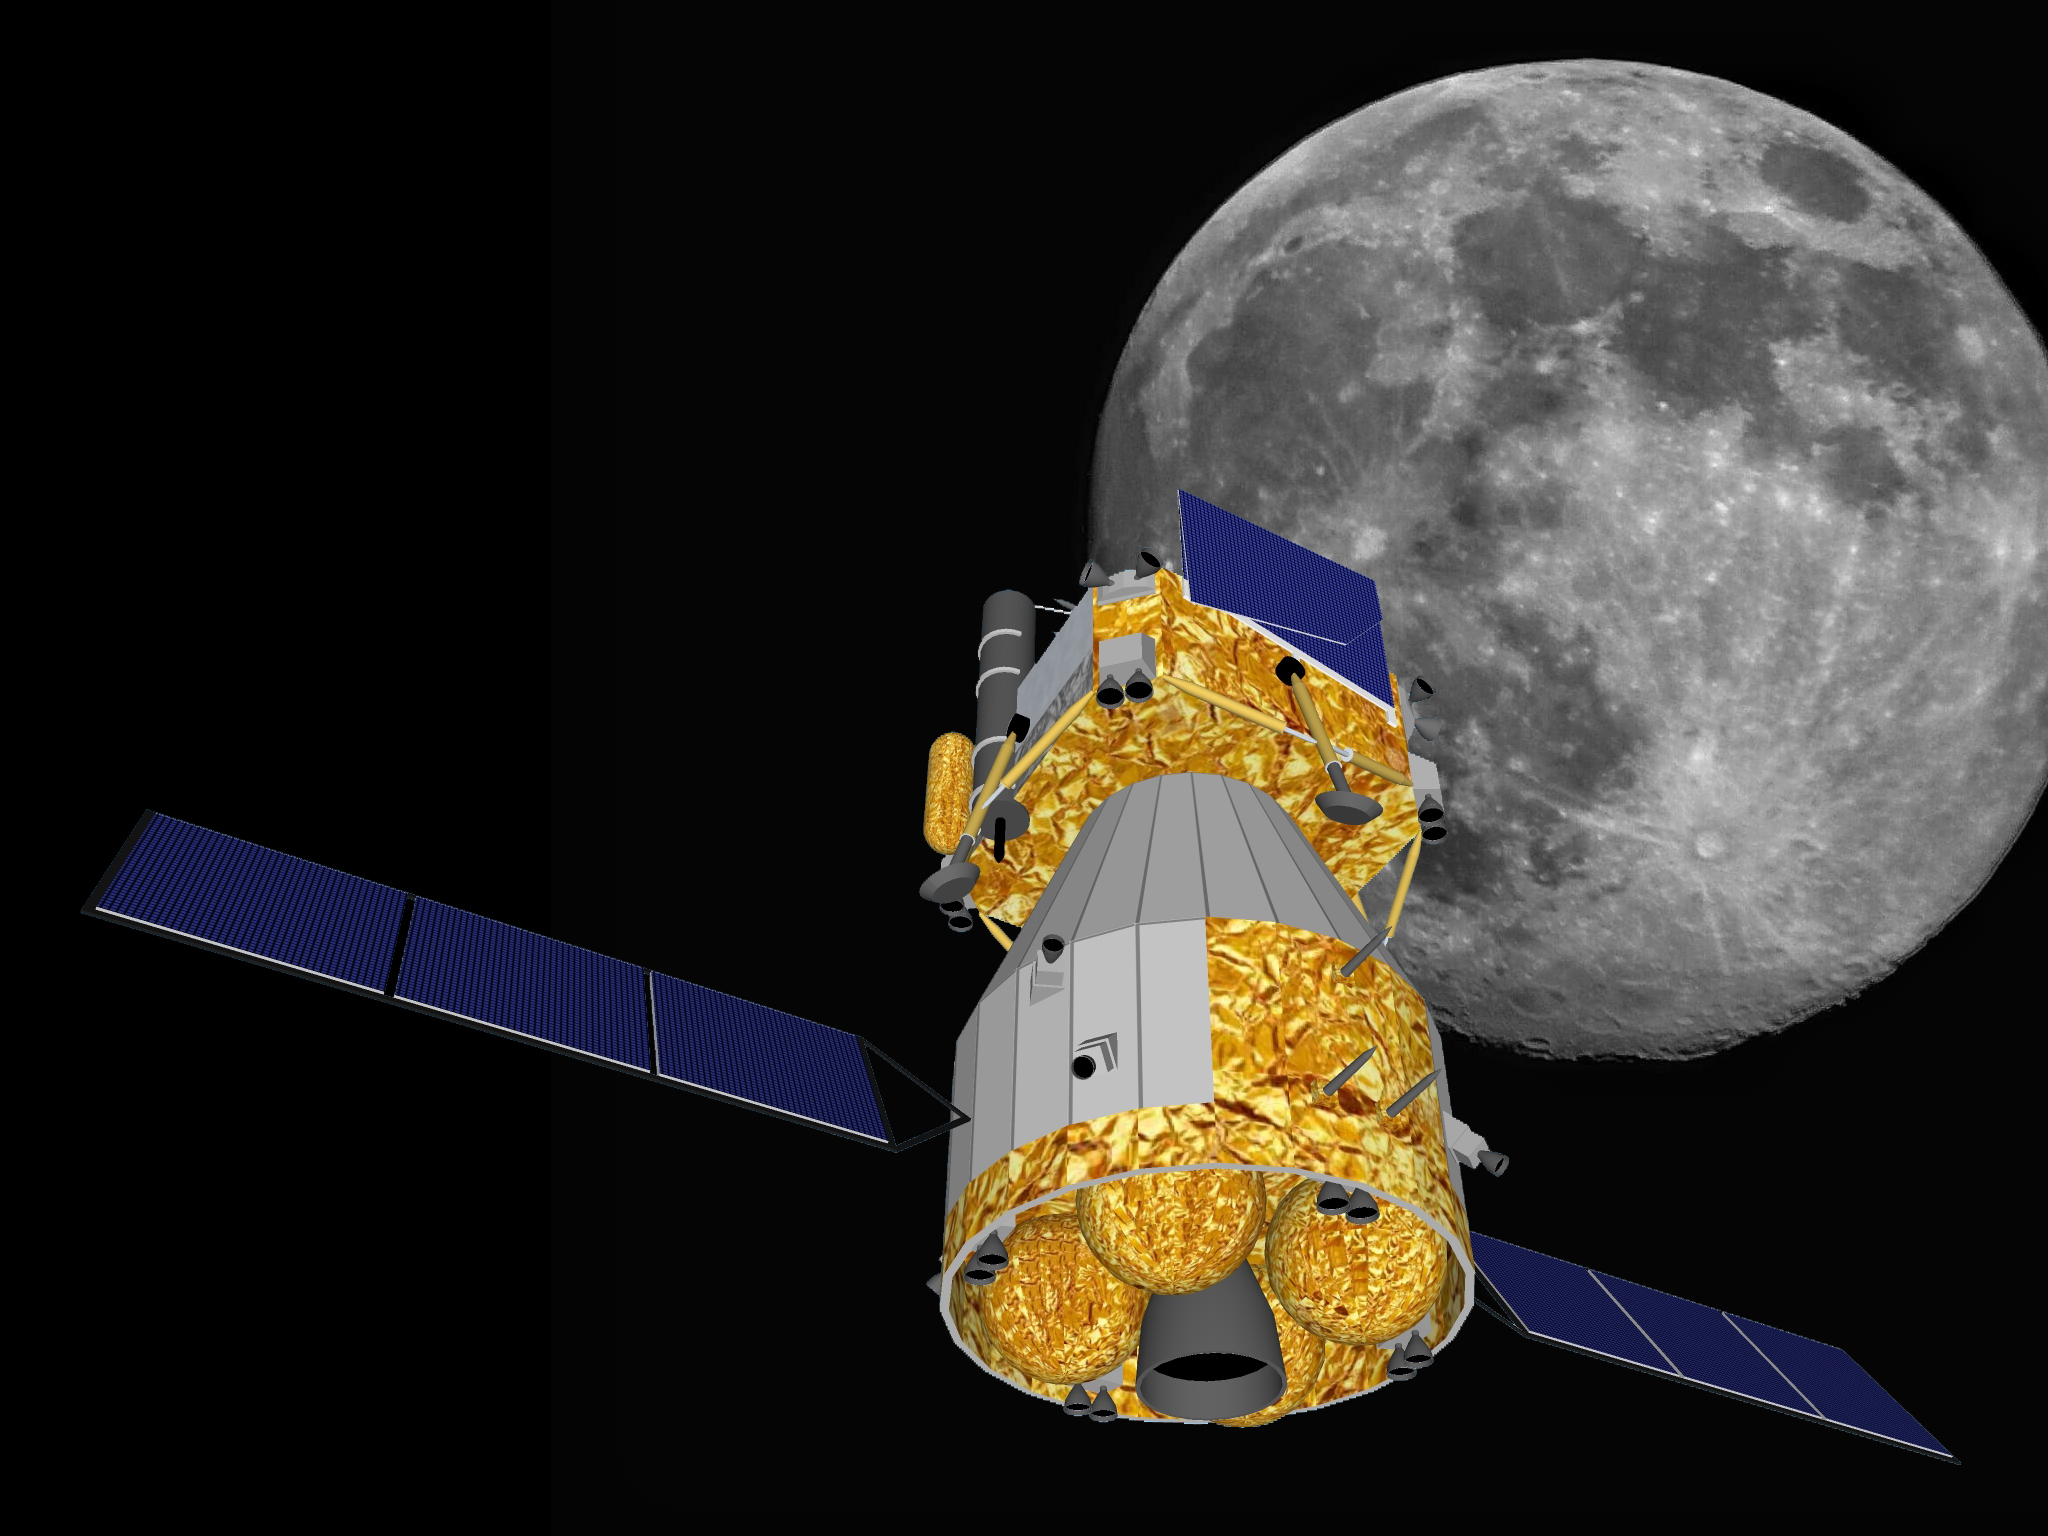 Info Shymkent - Mission updates for China's Chang'e 5 lunar sample return mission